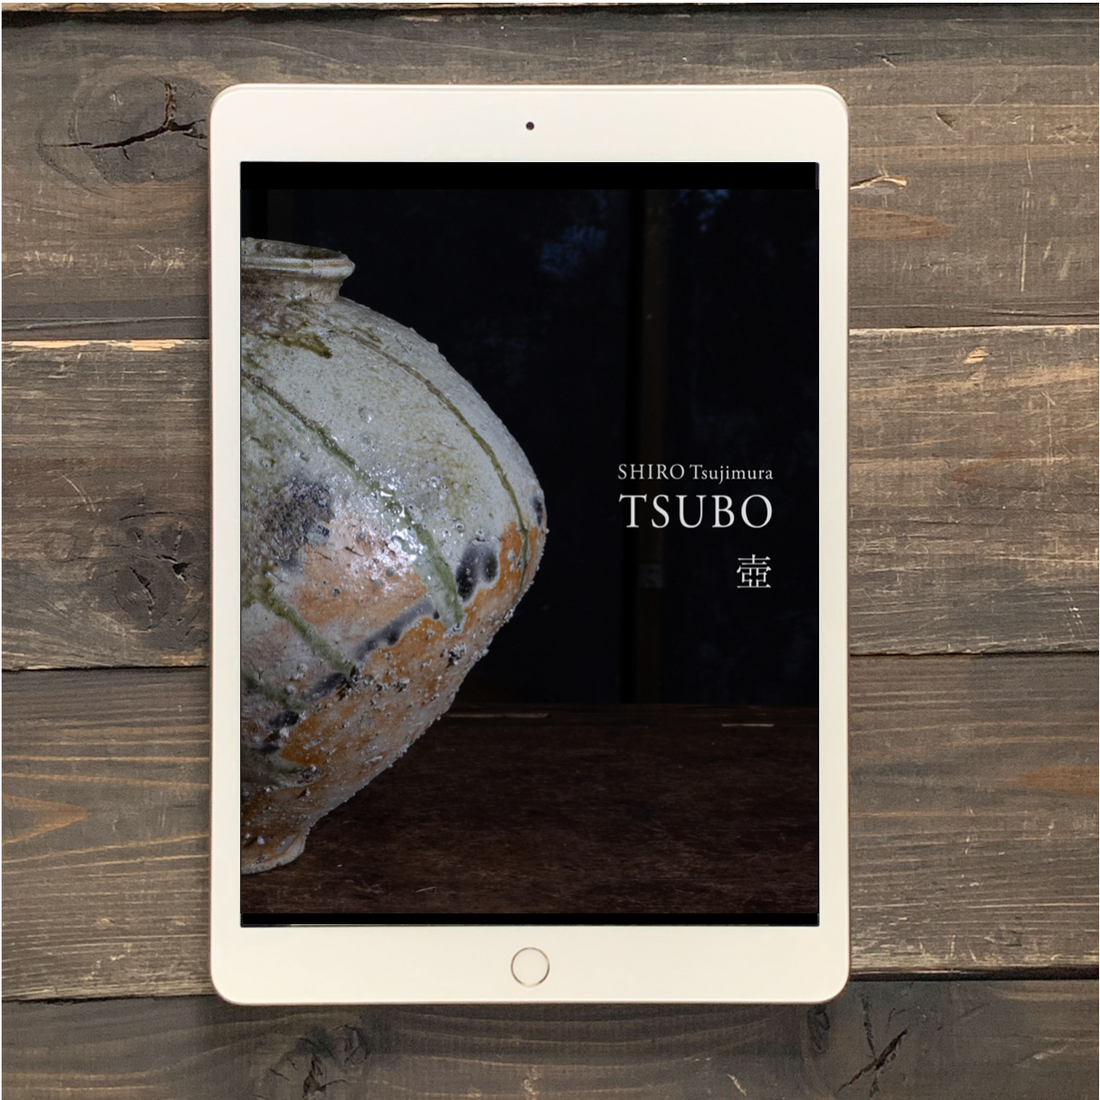 Shiro Tsujimura Tsubo Ebook is available for free in advance!